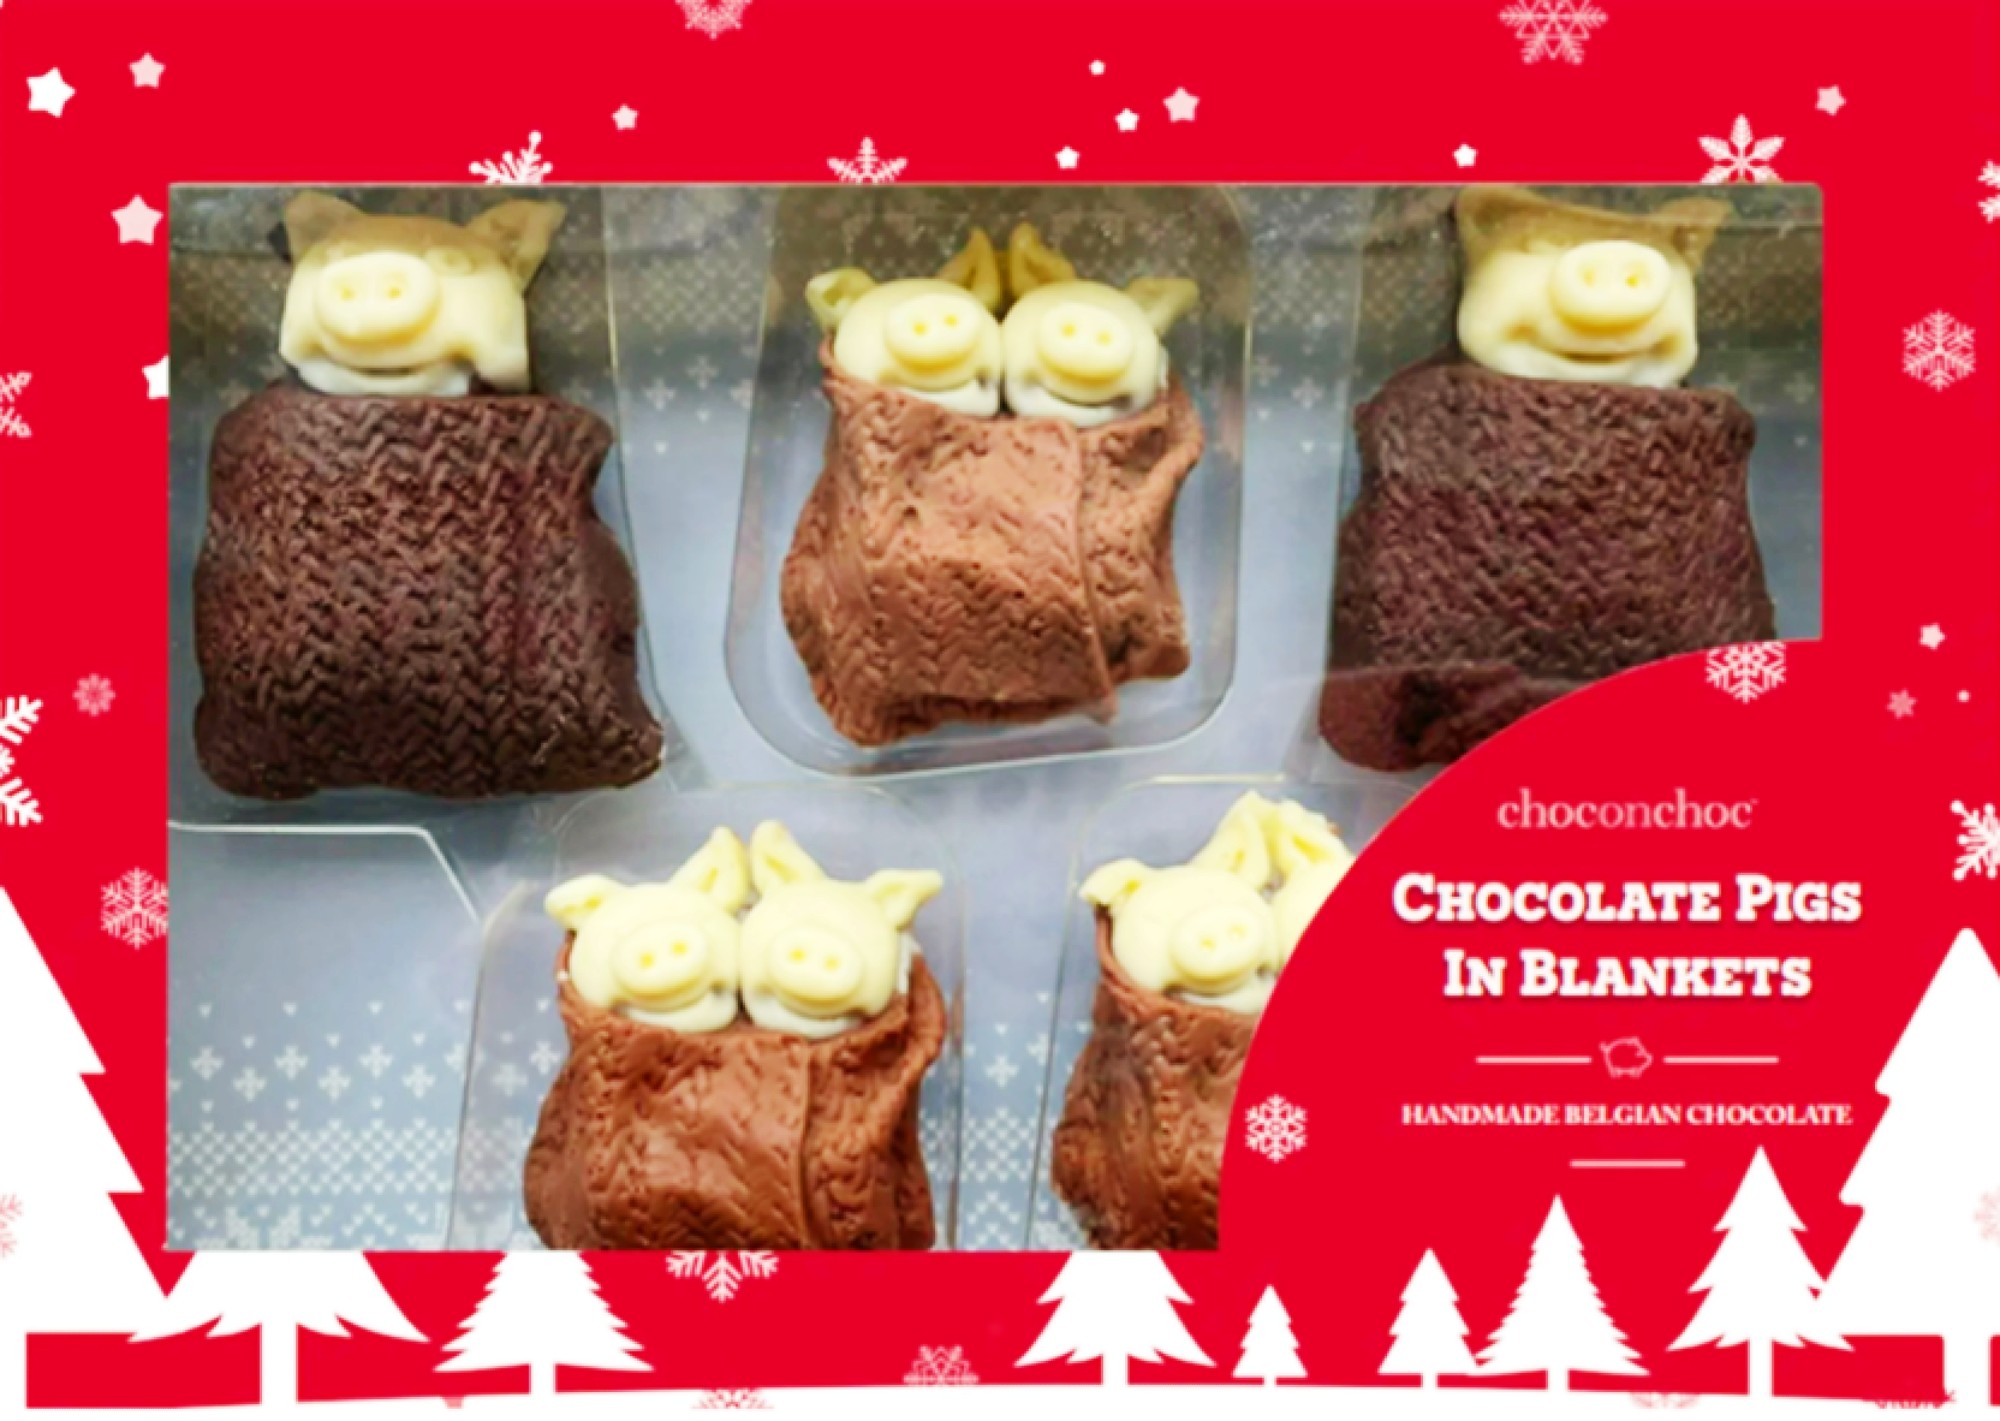 <img src="chocolate.jpg" alt="chocolate pigs in blankets budget friendly christmas"/>